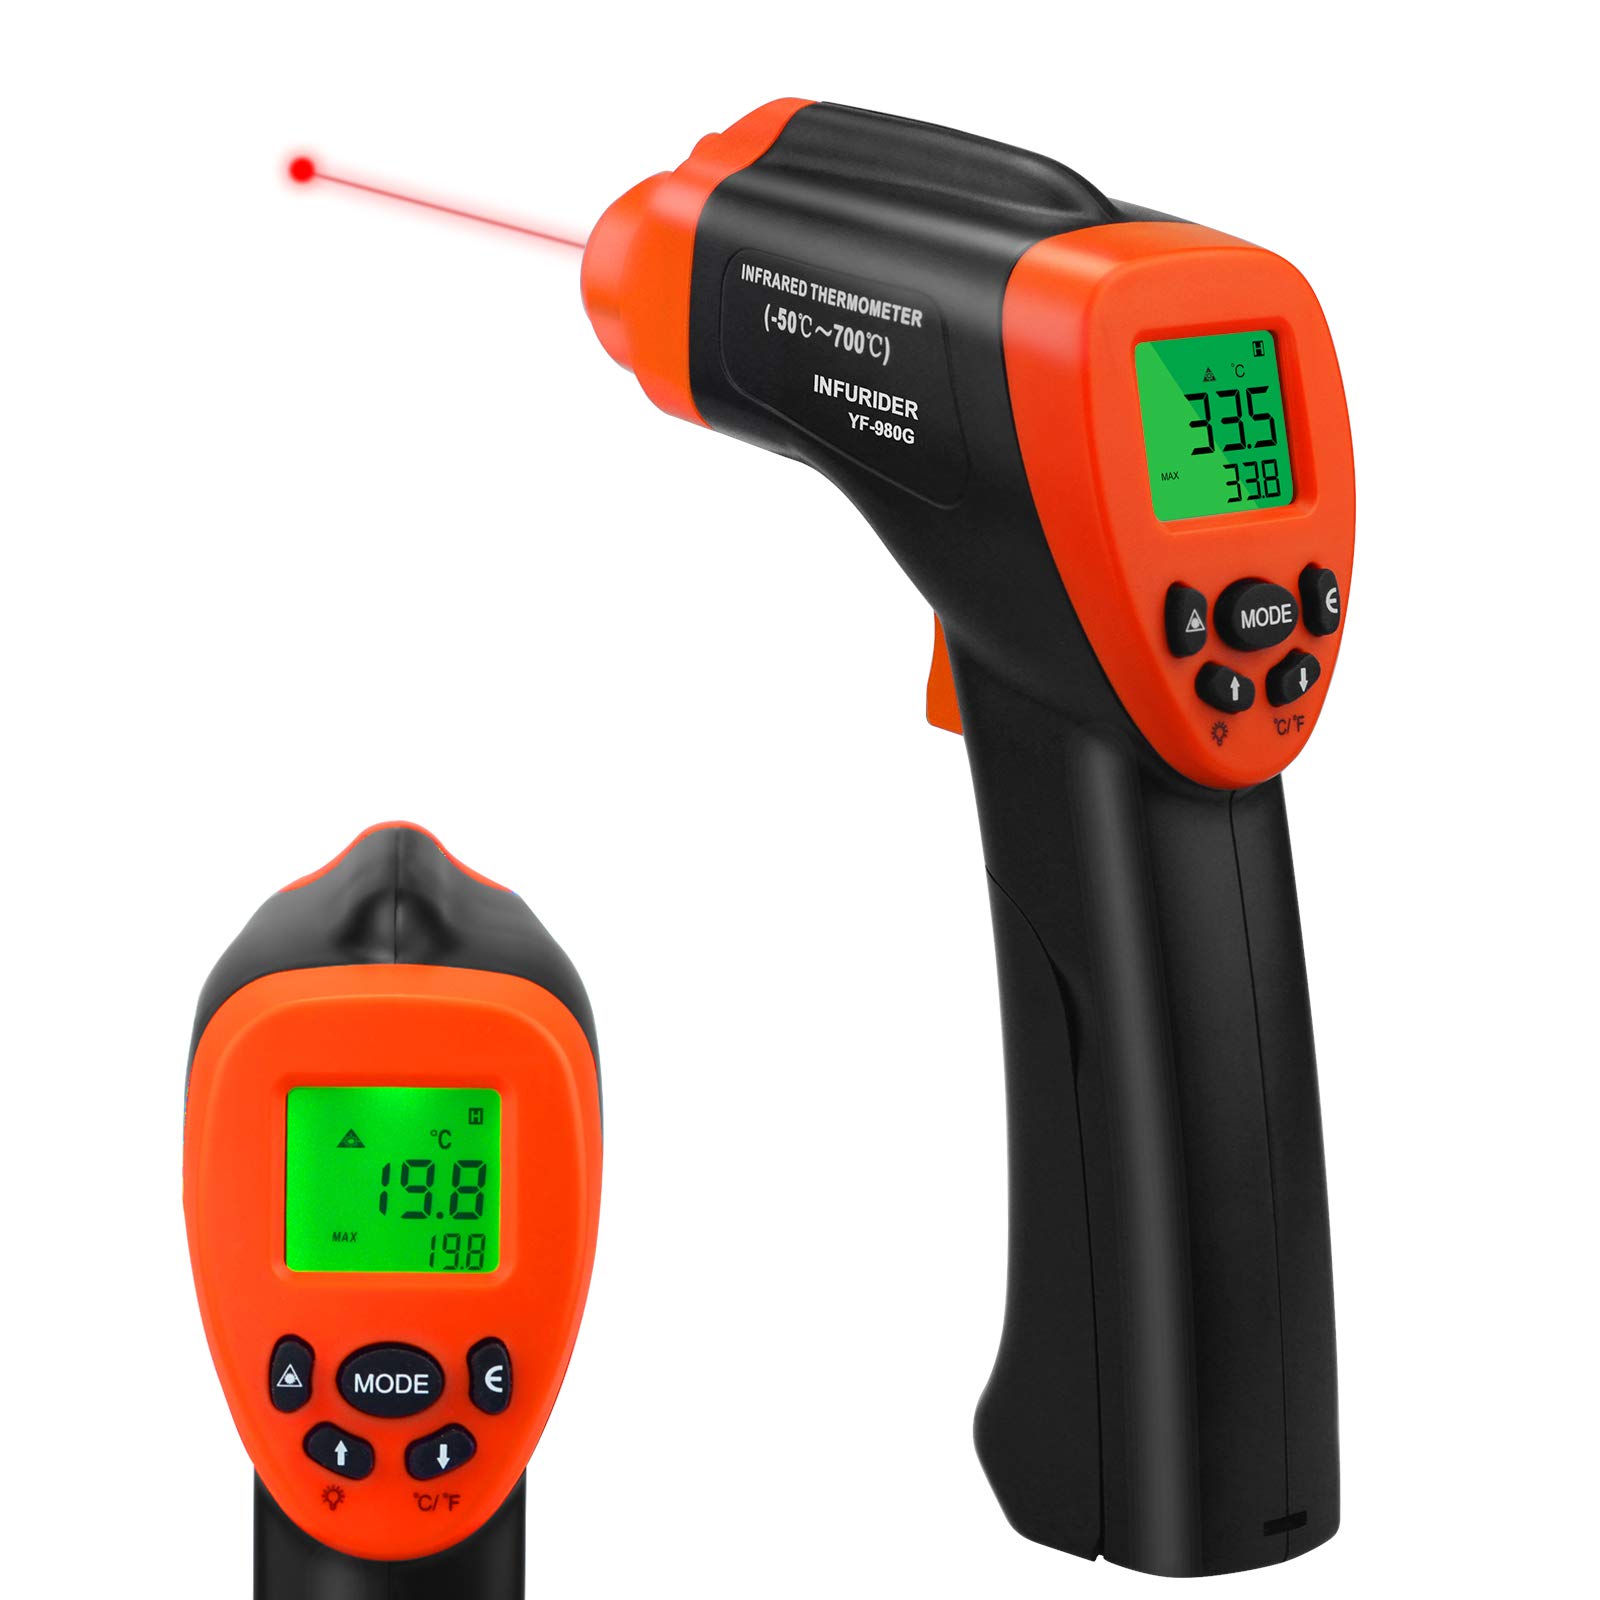 INFURIDER YF-980g Infrared Thermometer,Non-contact Digital Laser Temperature gun -58-1292 IR Temp gauge with 16:1 MaxMin Alarm f